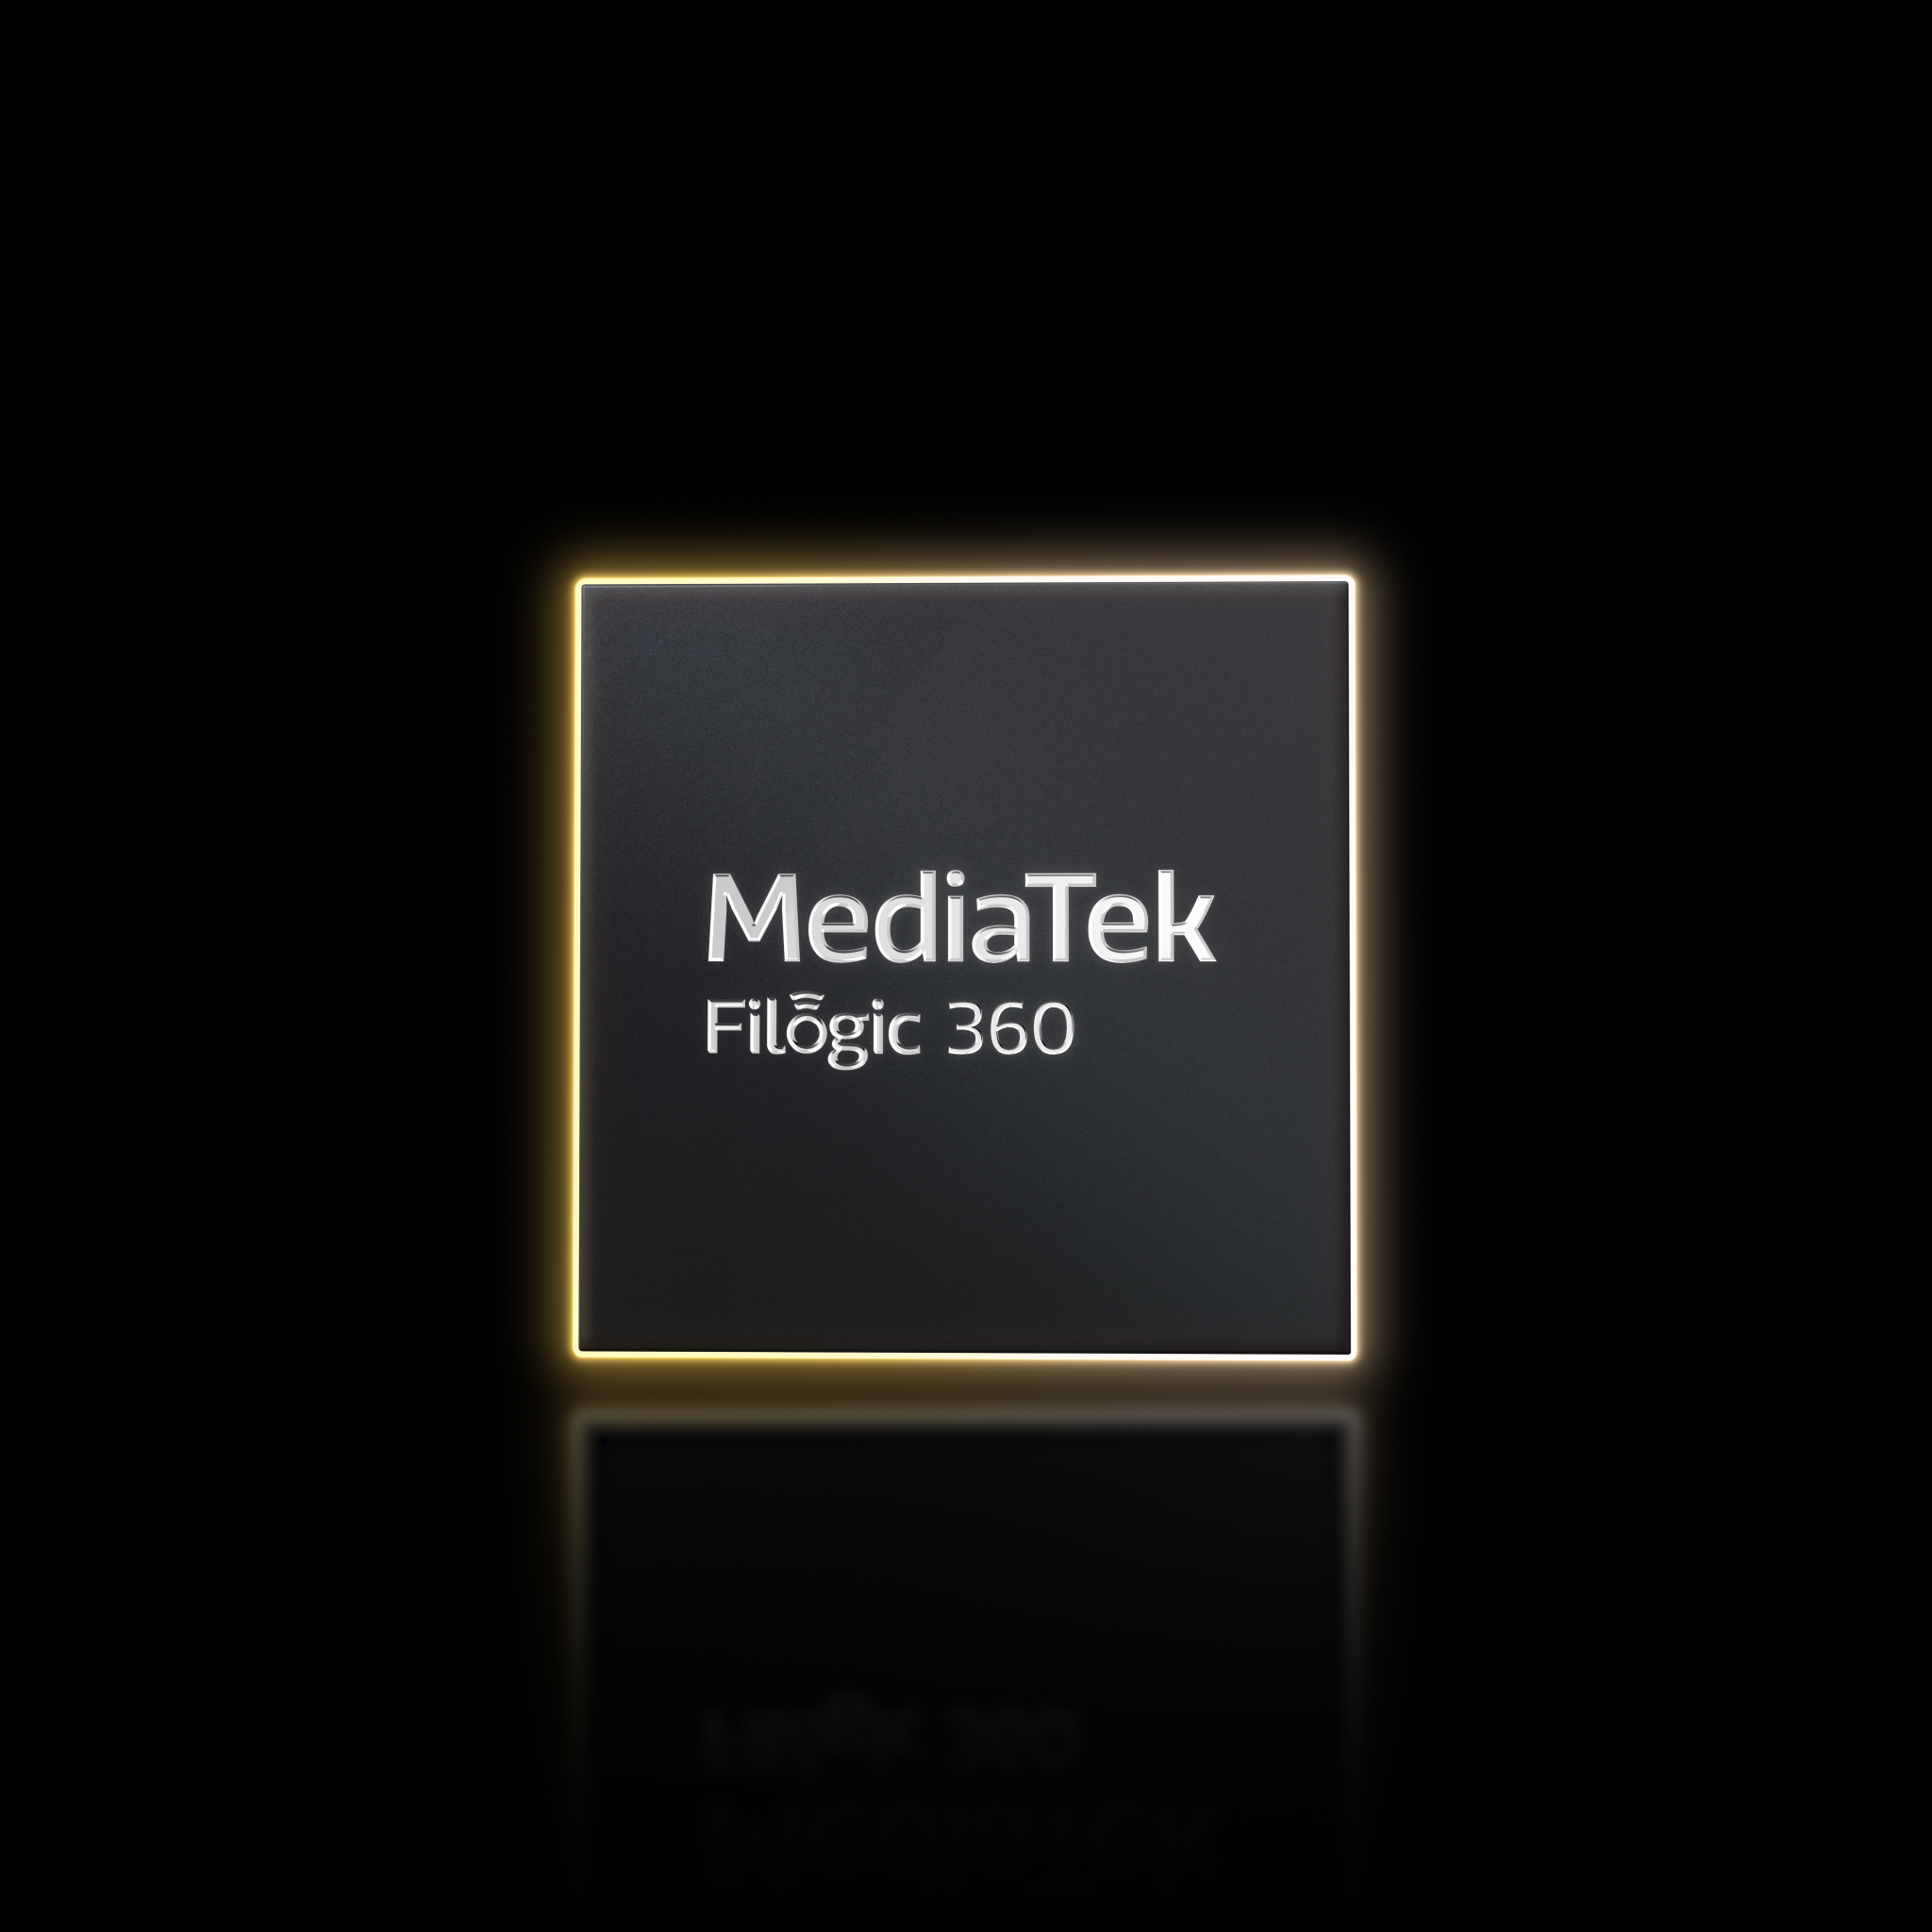 MediaTek发布Filogic 860和Filogic 360平台